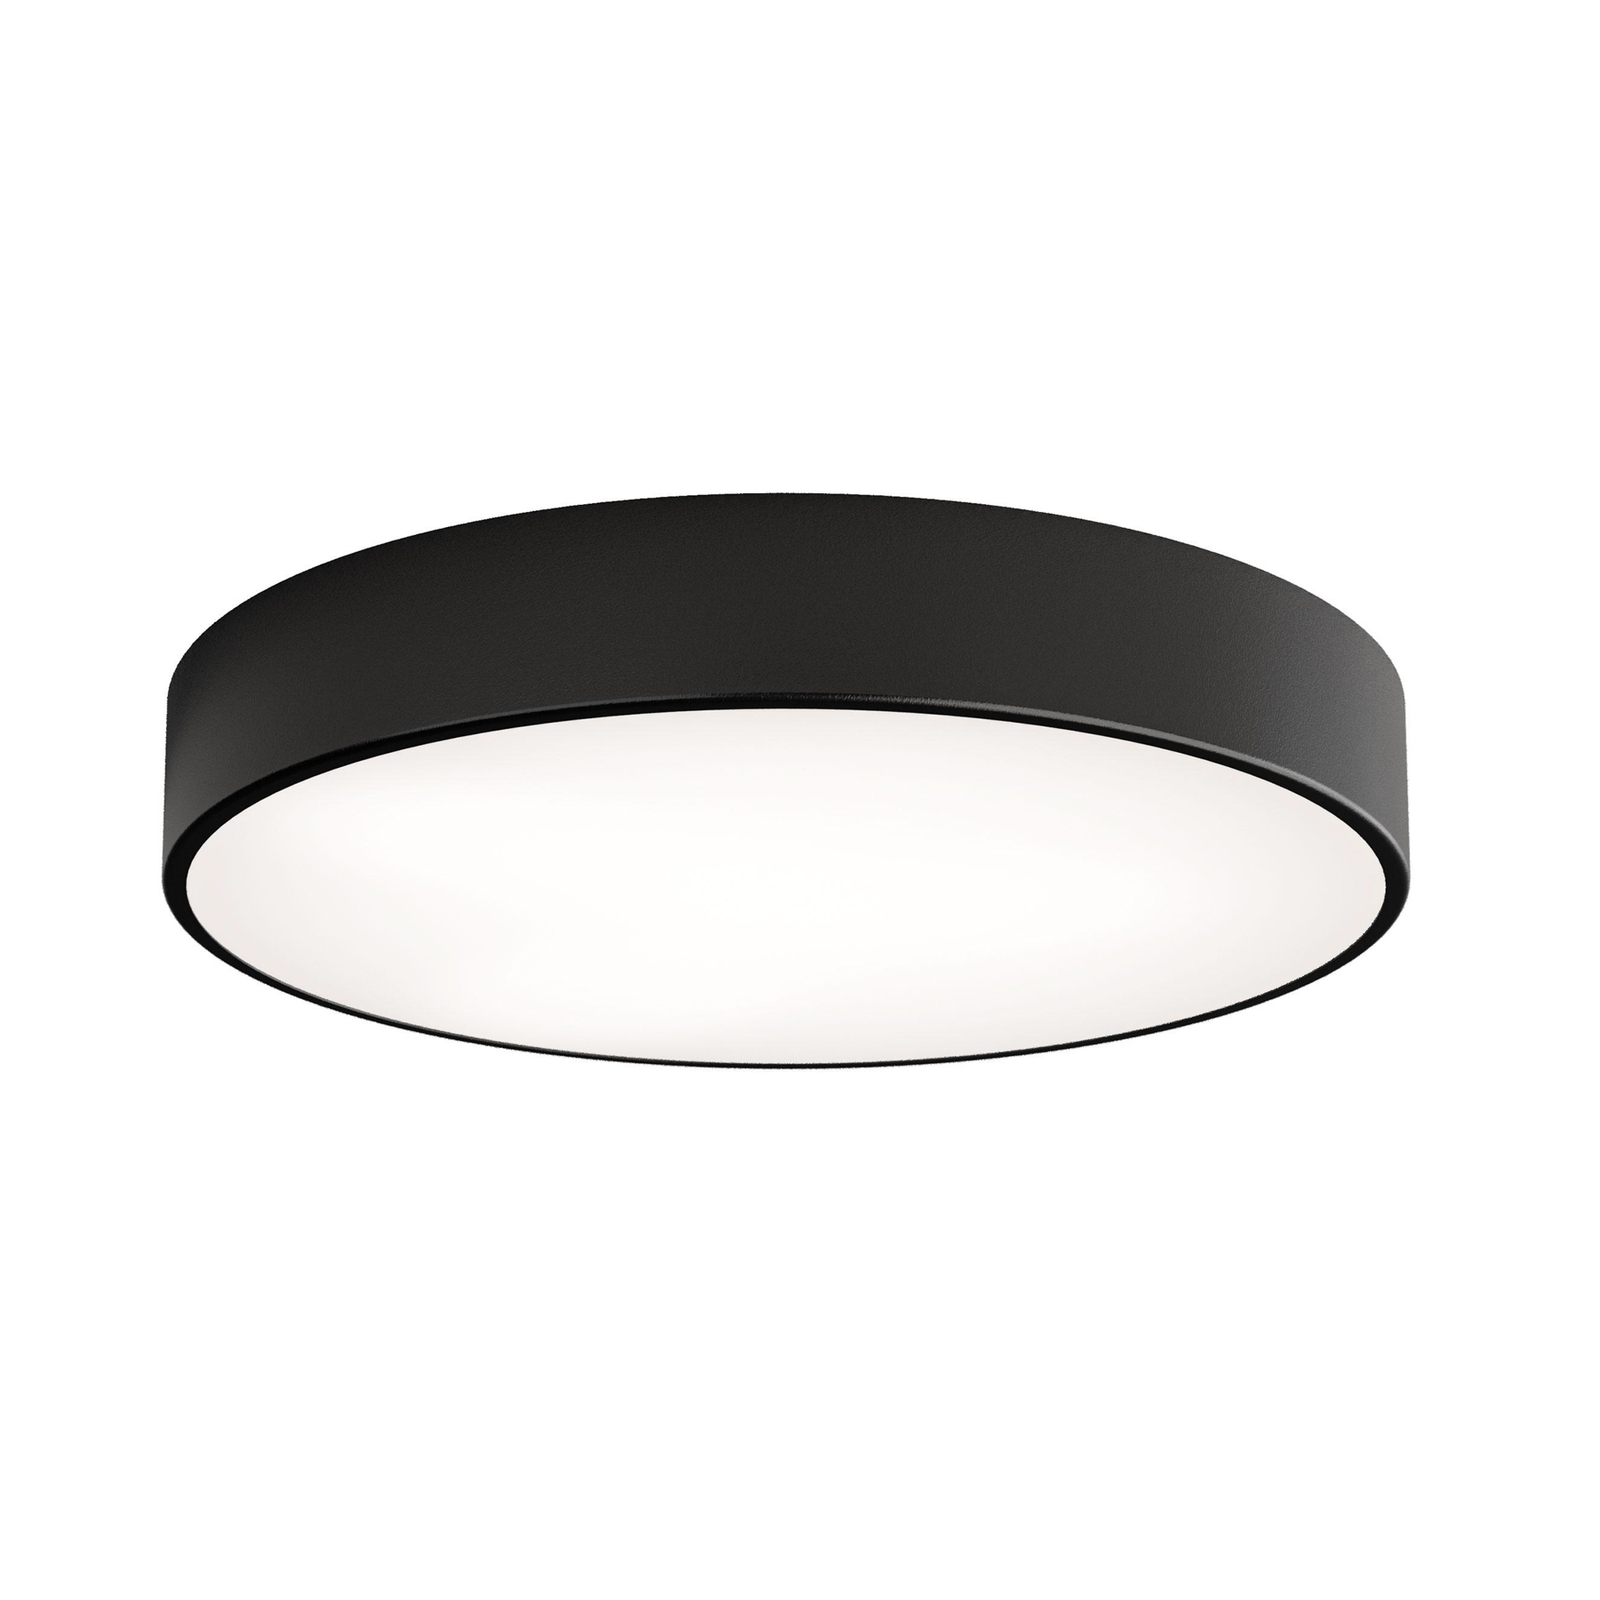 Cleo taklampe, svart, Ø 50 cm, metall, IP54